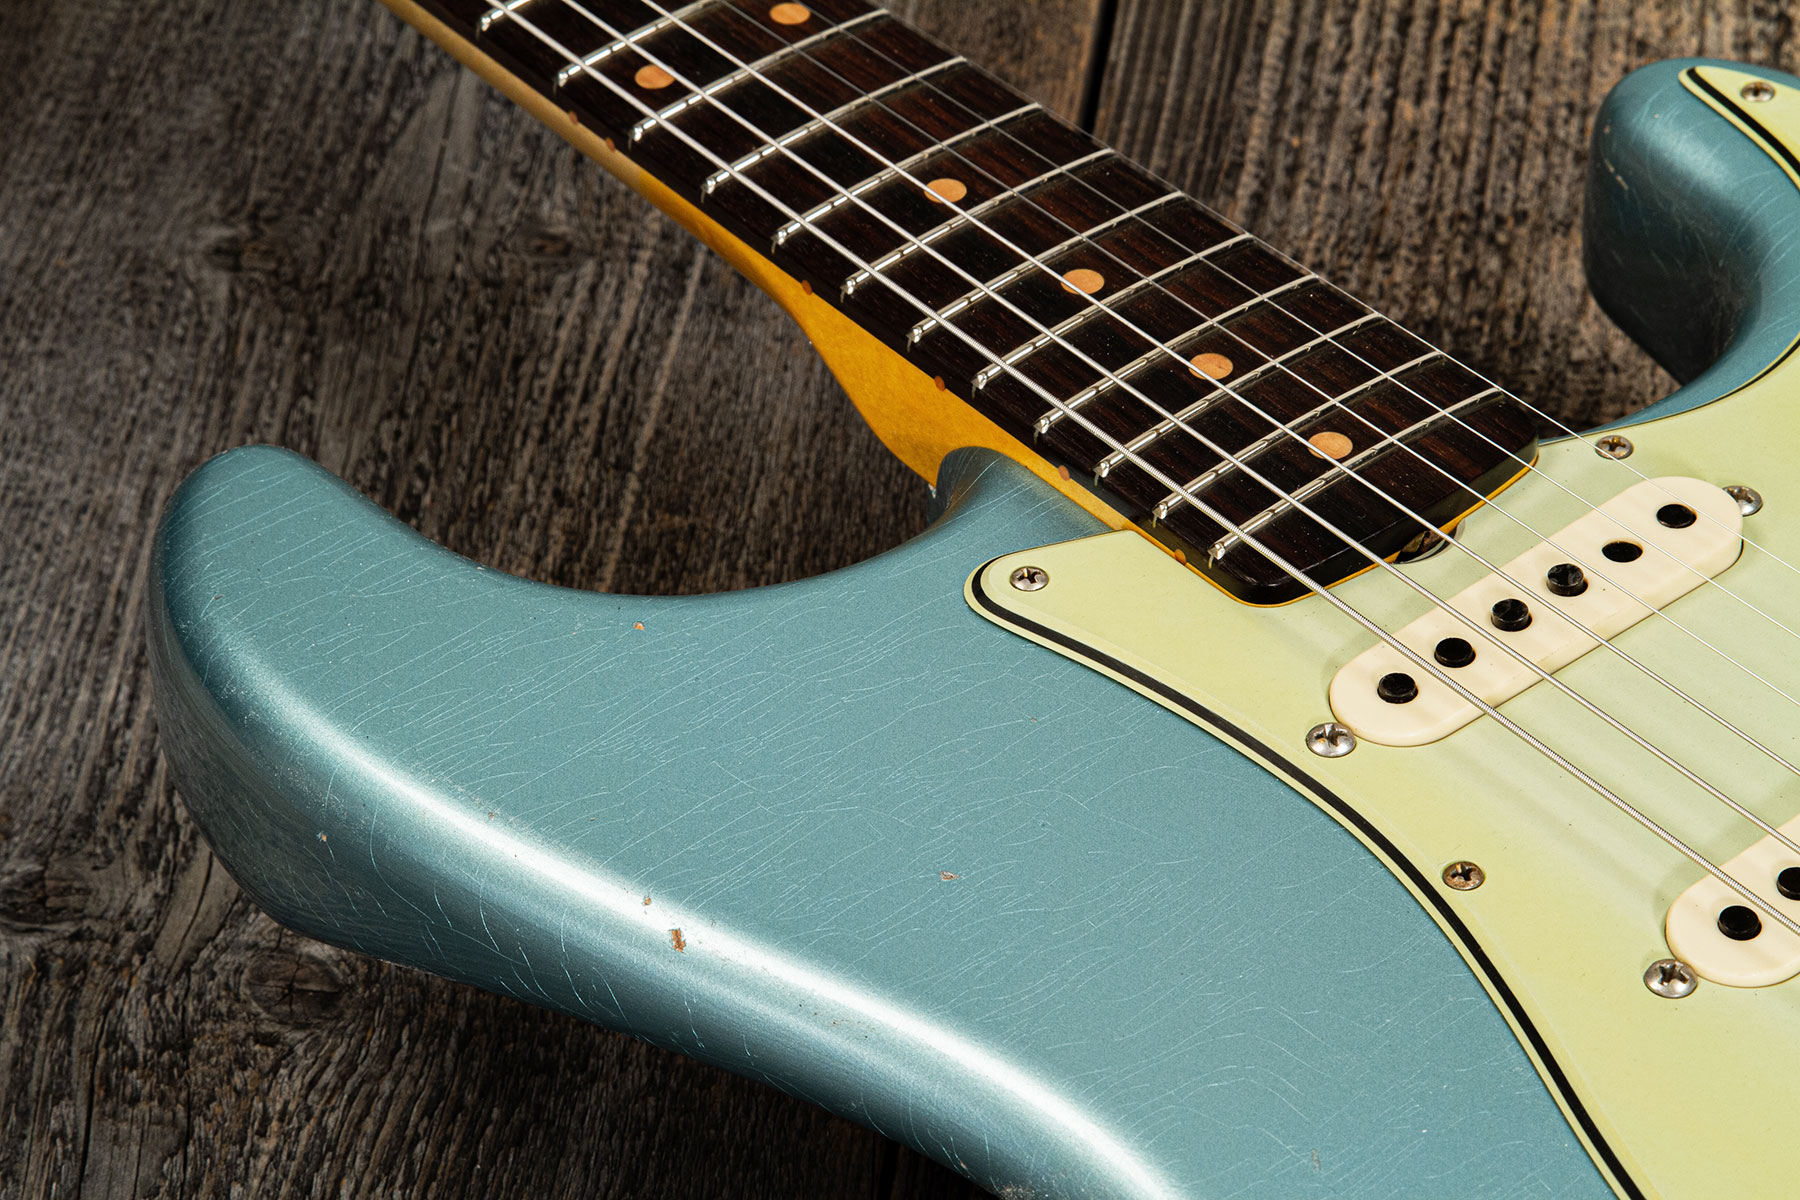 Fender Custom Shop Strat 1959 3s Trem Rw #cz566857 - Journeyman Relic Teal Green Metallic - E-Gitarre in Str-Form - Variation 4